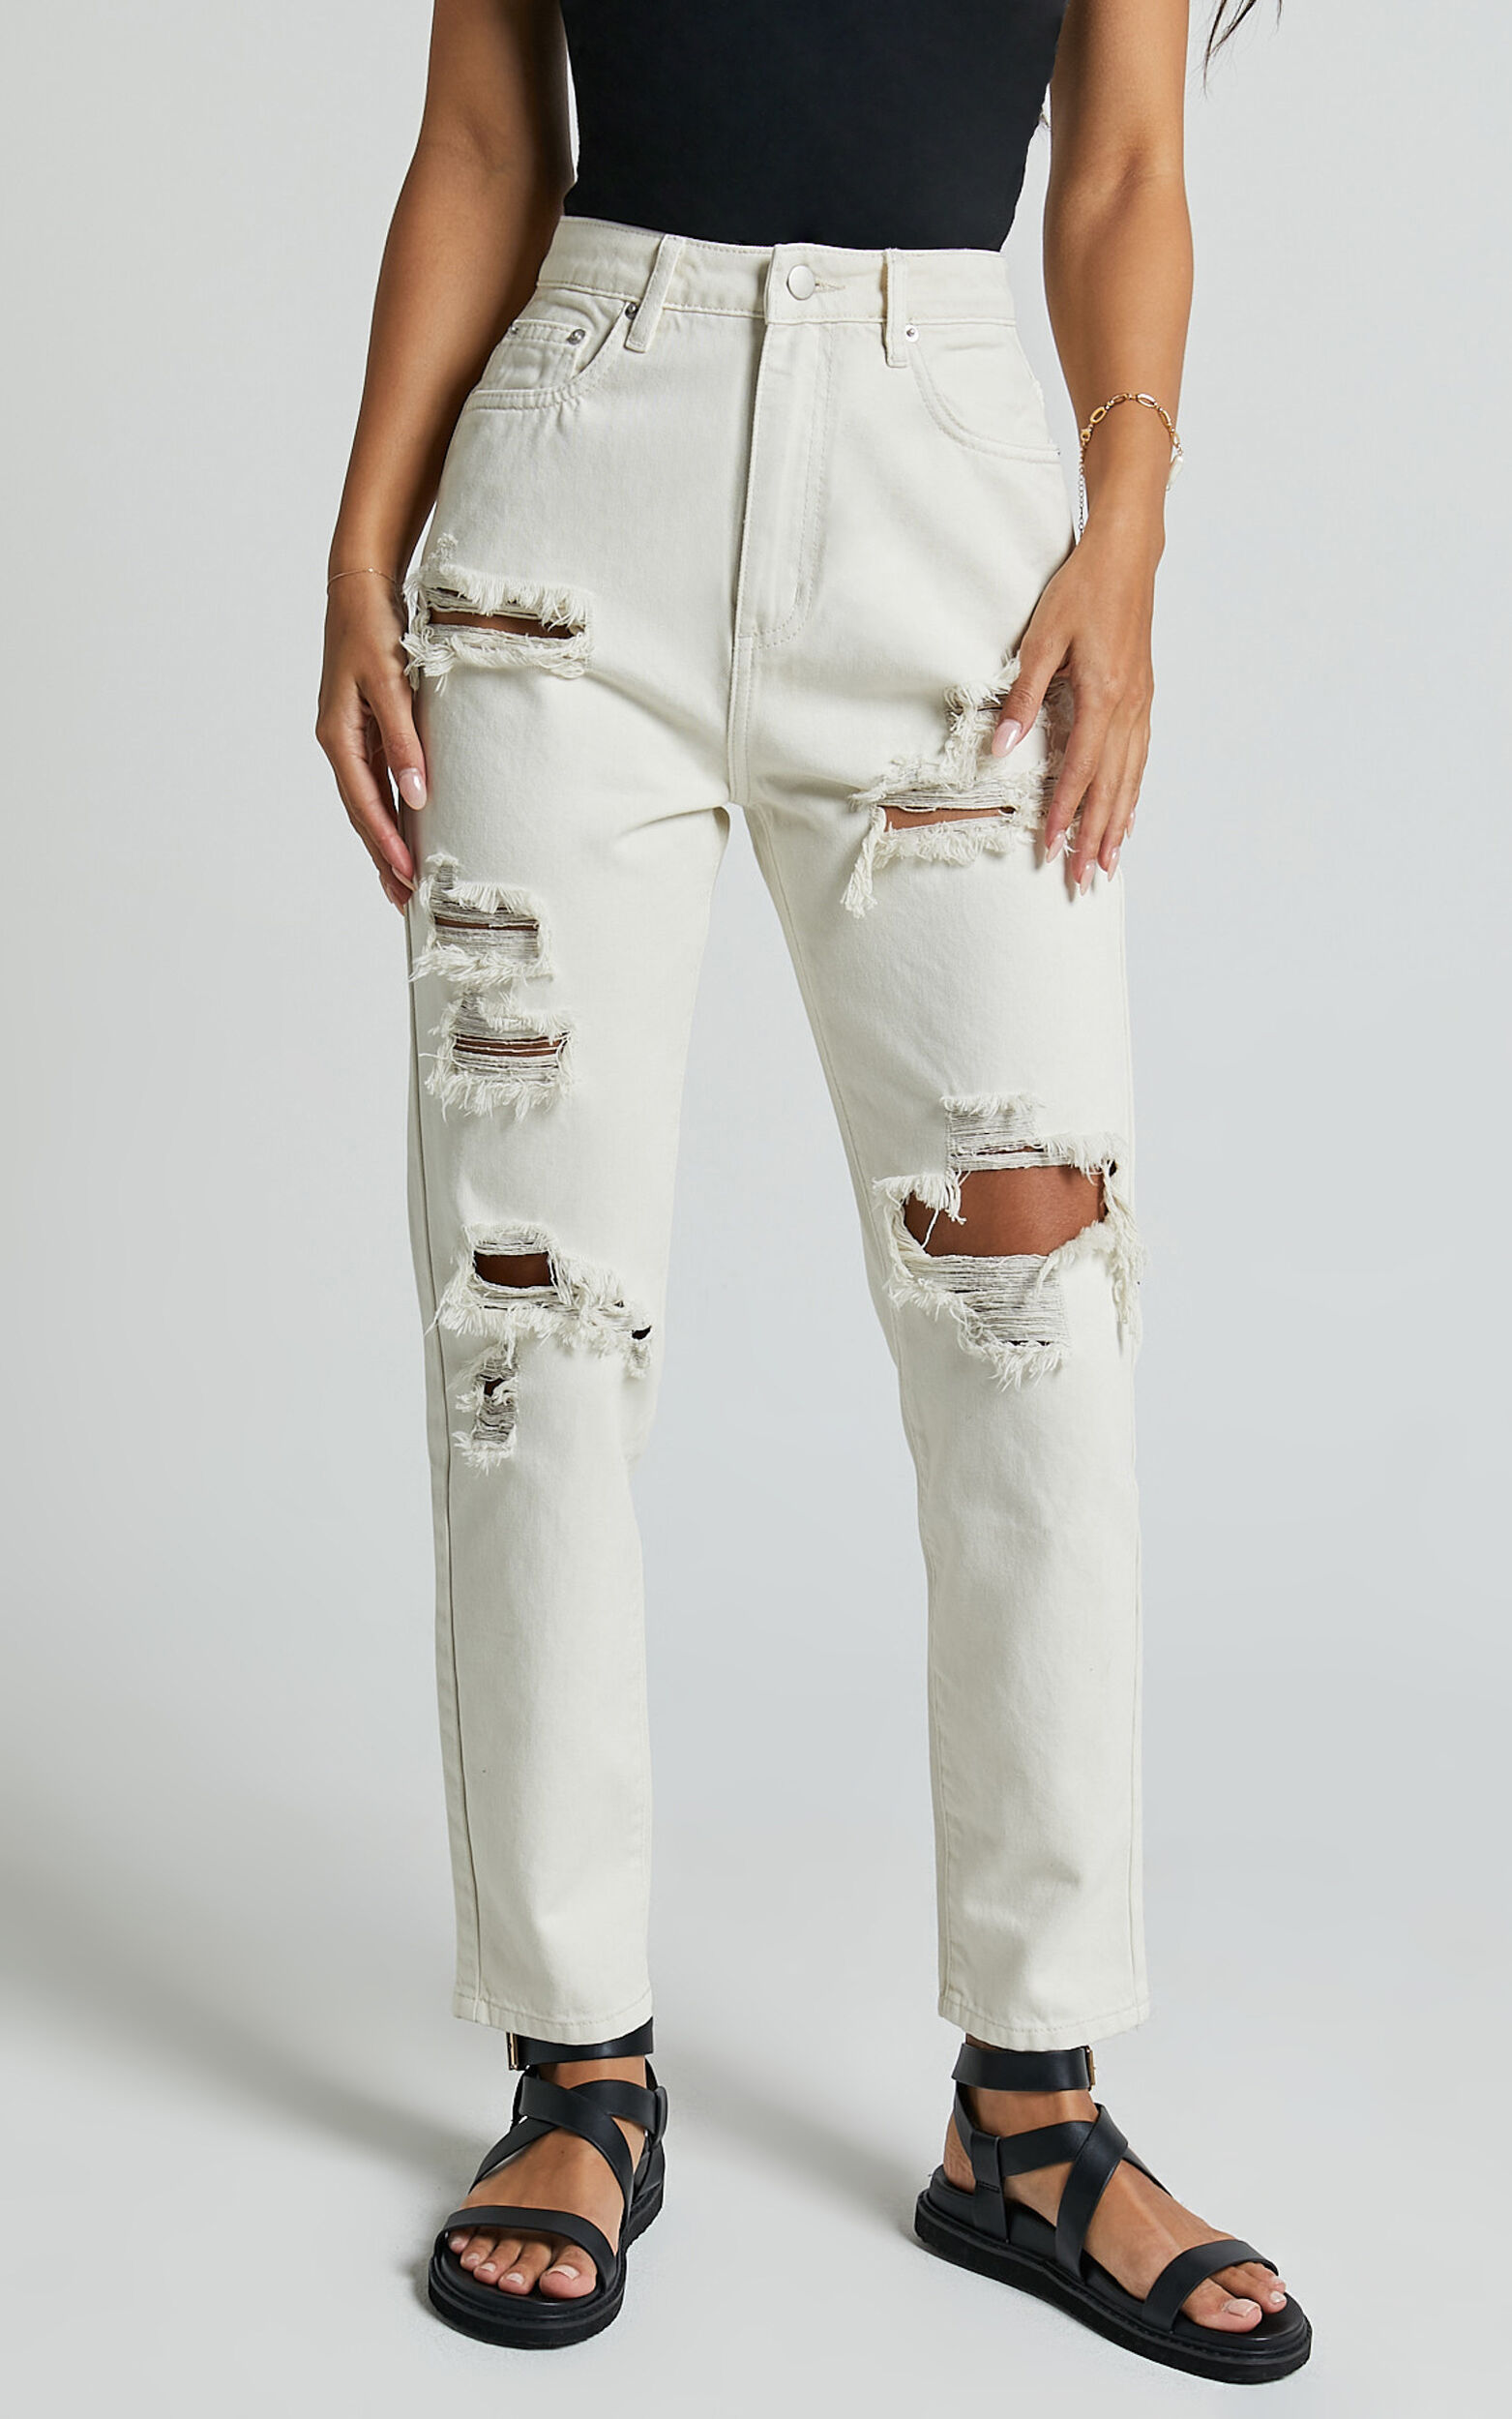 Billie Jeans - High Waisted Cotton Distressed Mom Denim Jeans in Ecru